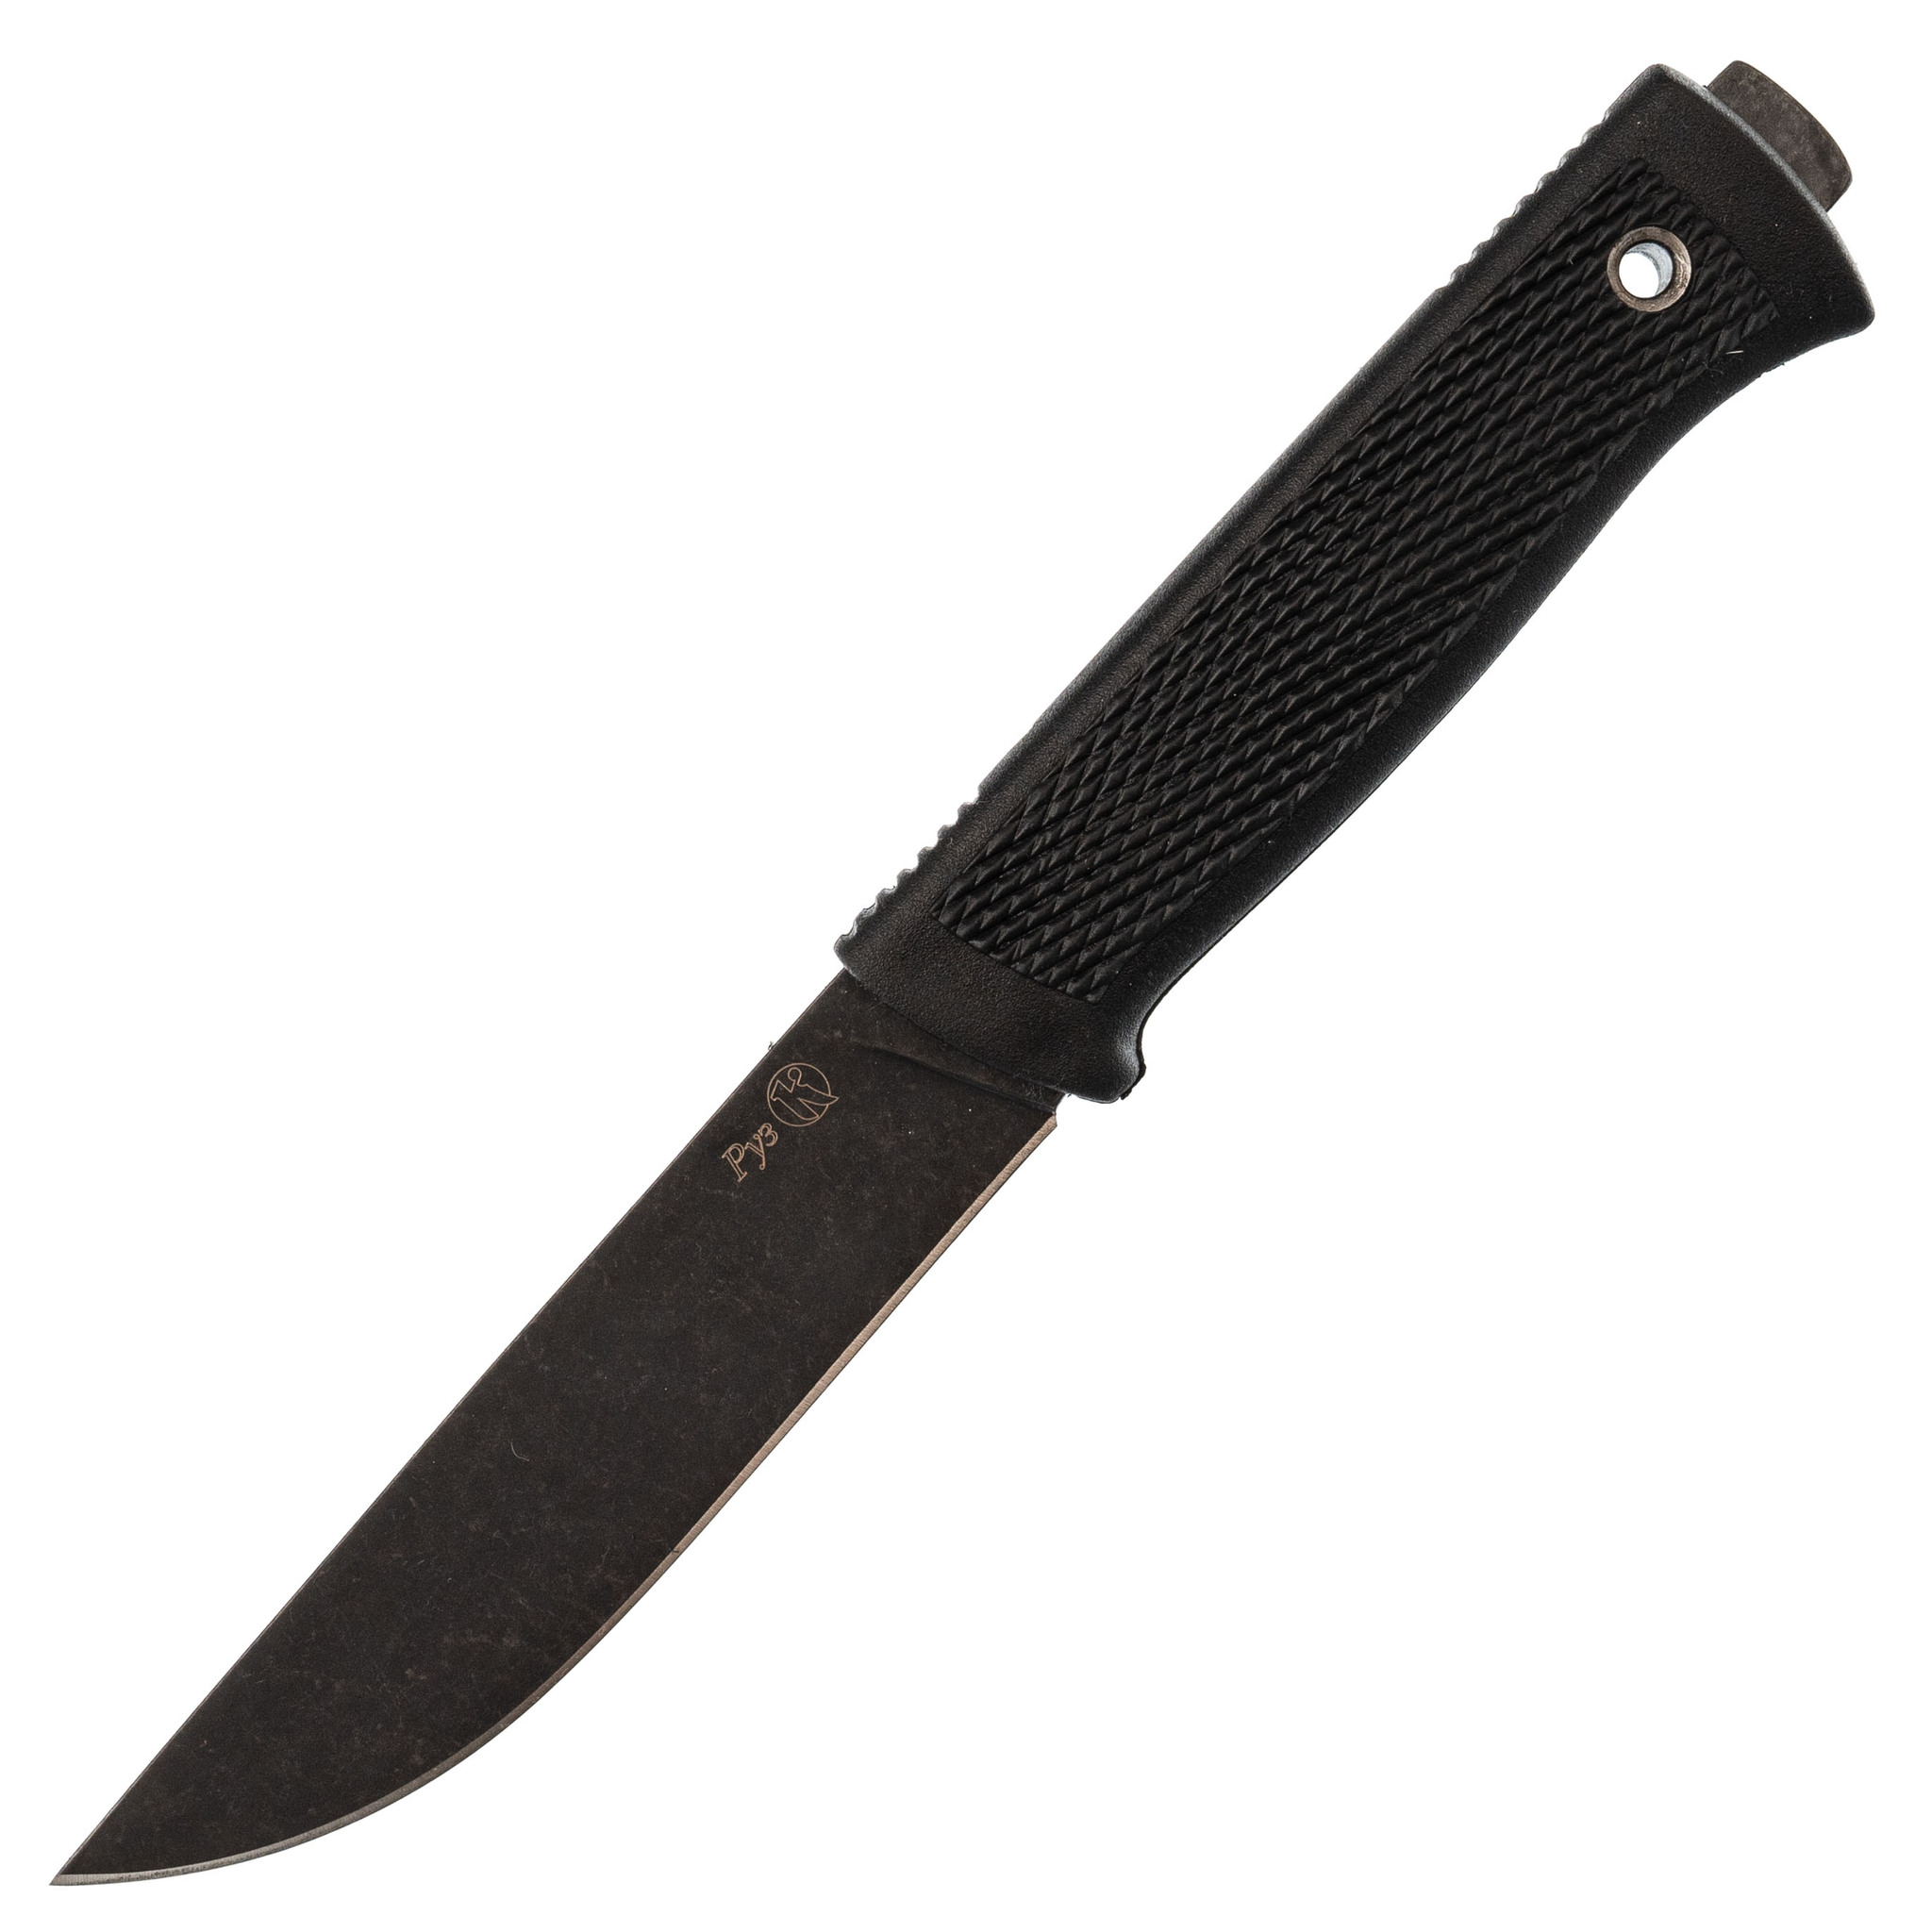 Нож Руз Кизляр,сталь AUS-8, рукоять эластрон, черный, Бренды, Кизляр ПП